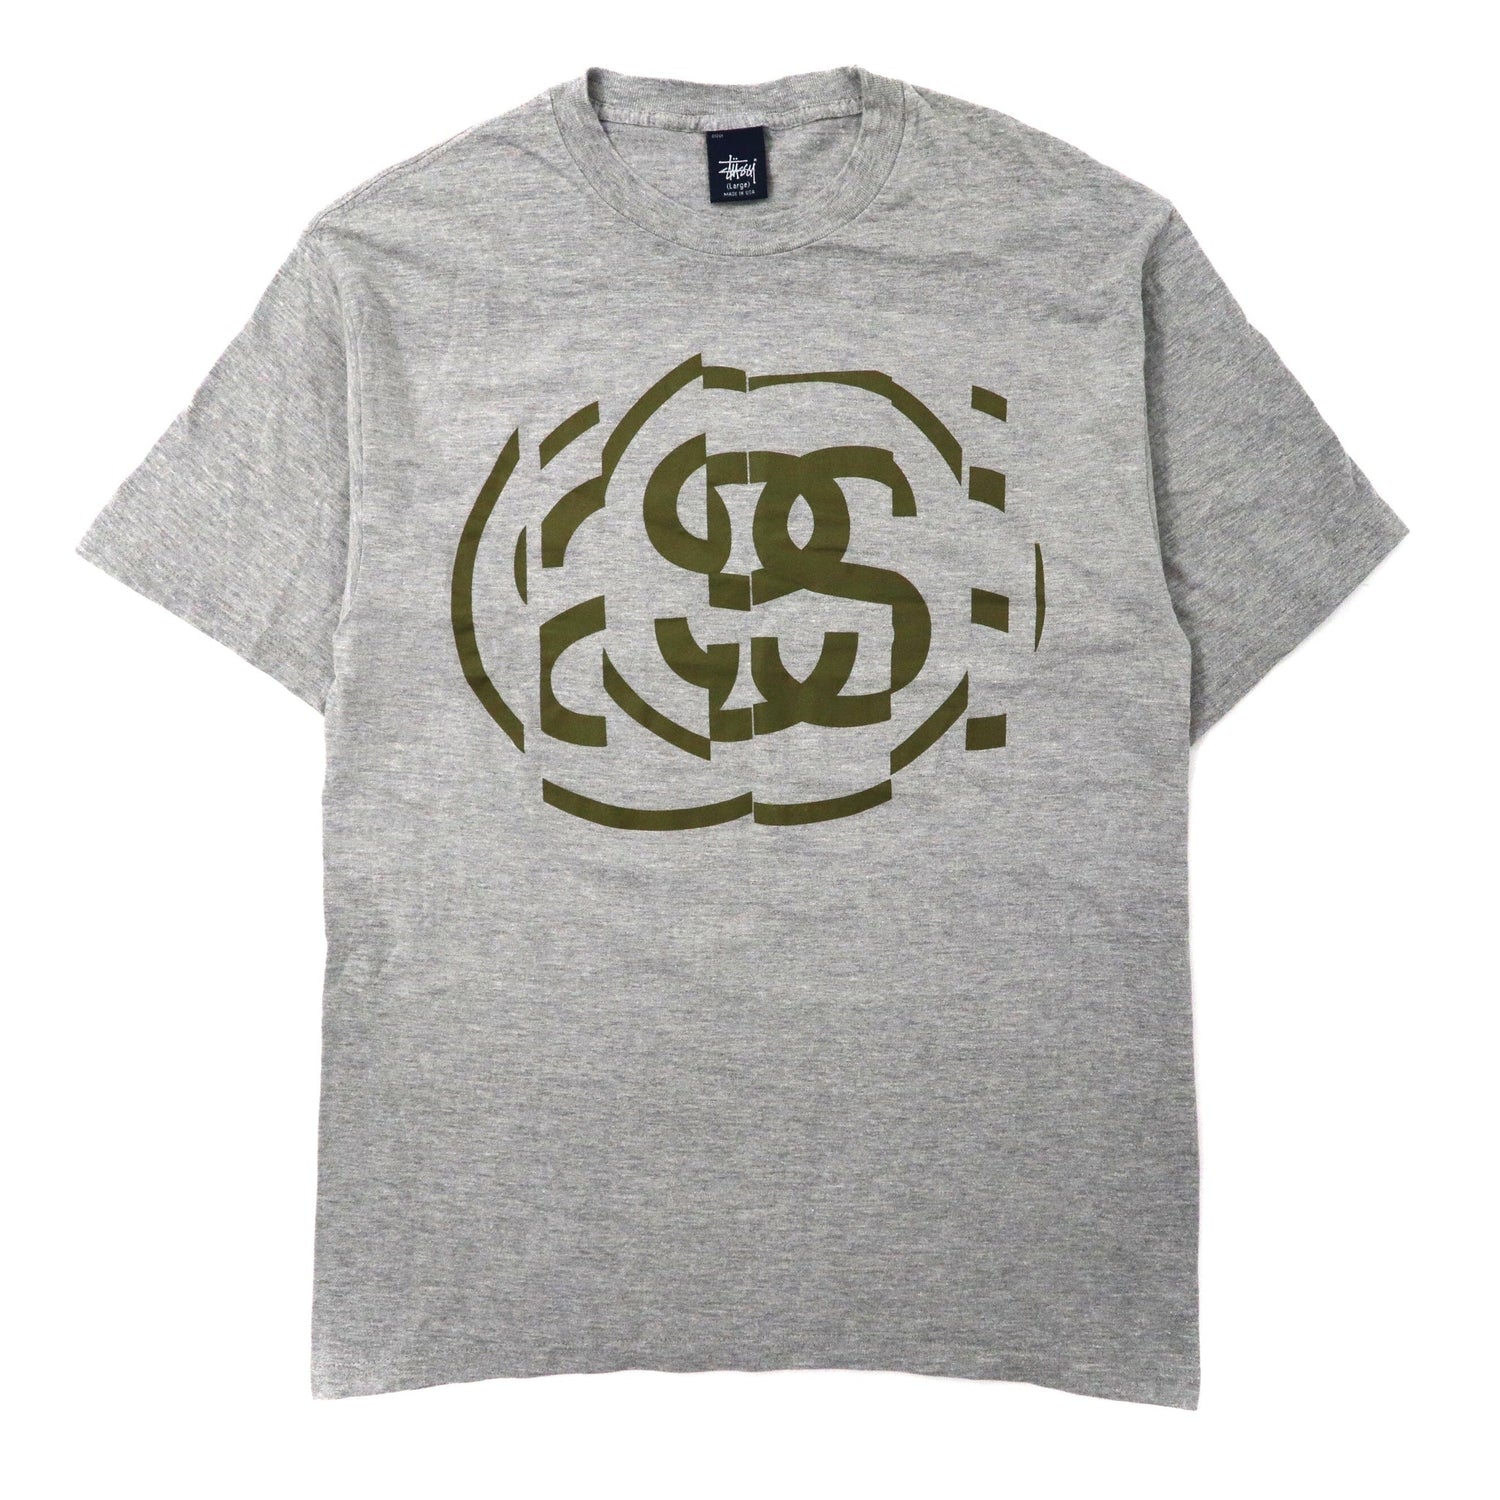 Stussy Logo Print Tee T-Shirt L Gray Cotton Navy Tag 90s USA Made